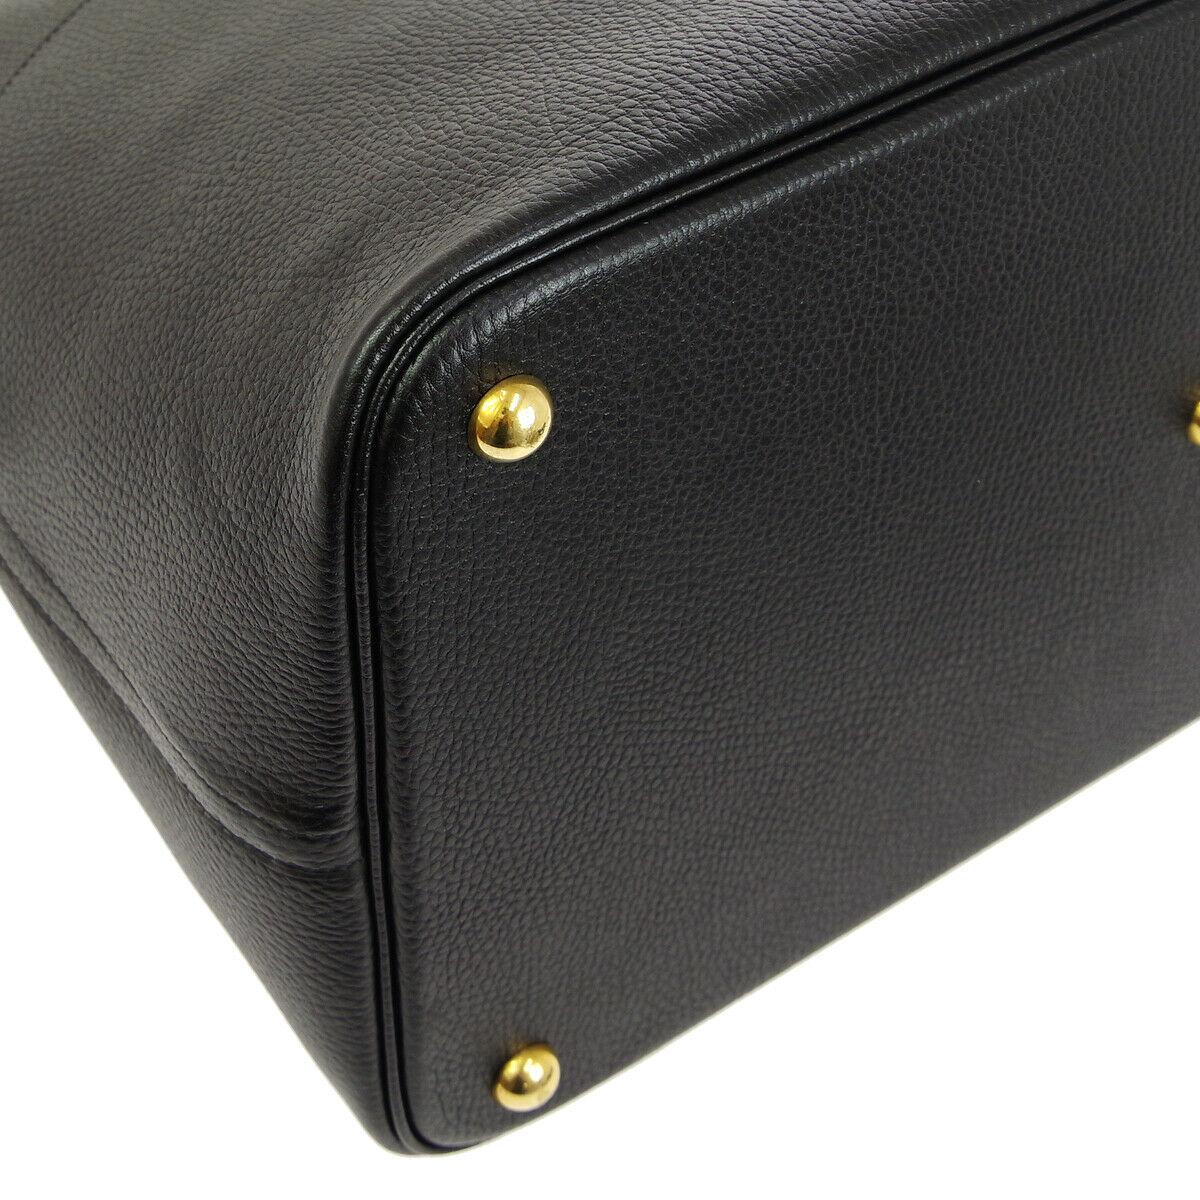 Hermes Black Leather Gold Large Travel Carryall Top Handle Satchel Tote Bag 2